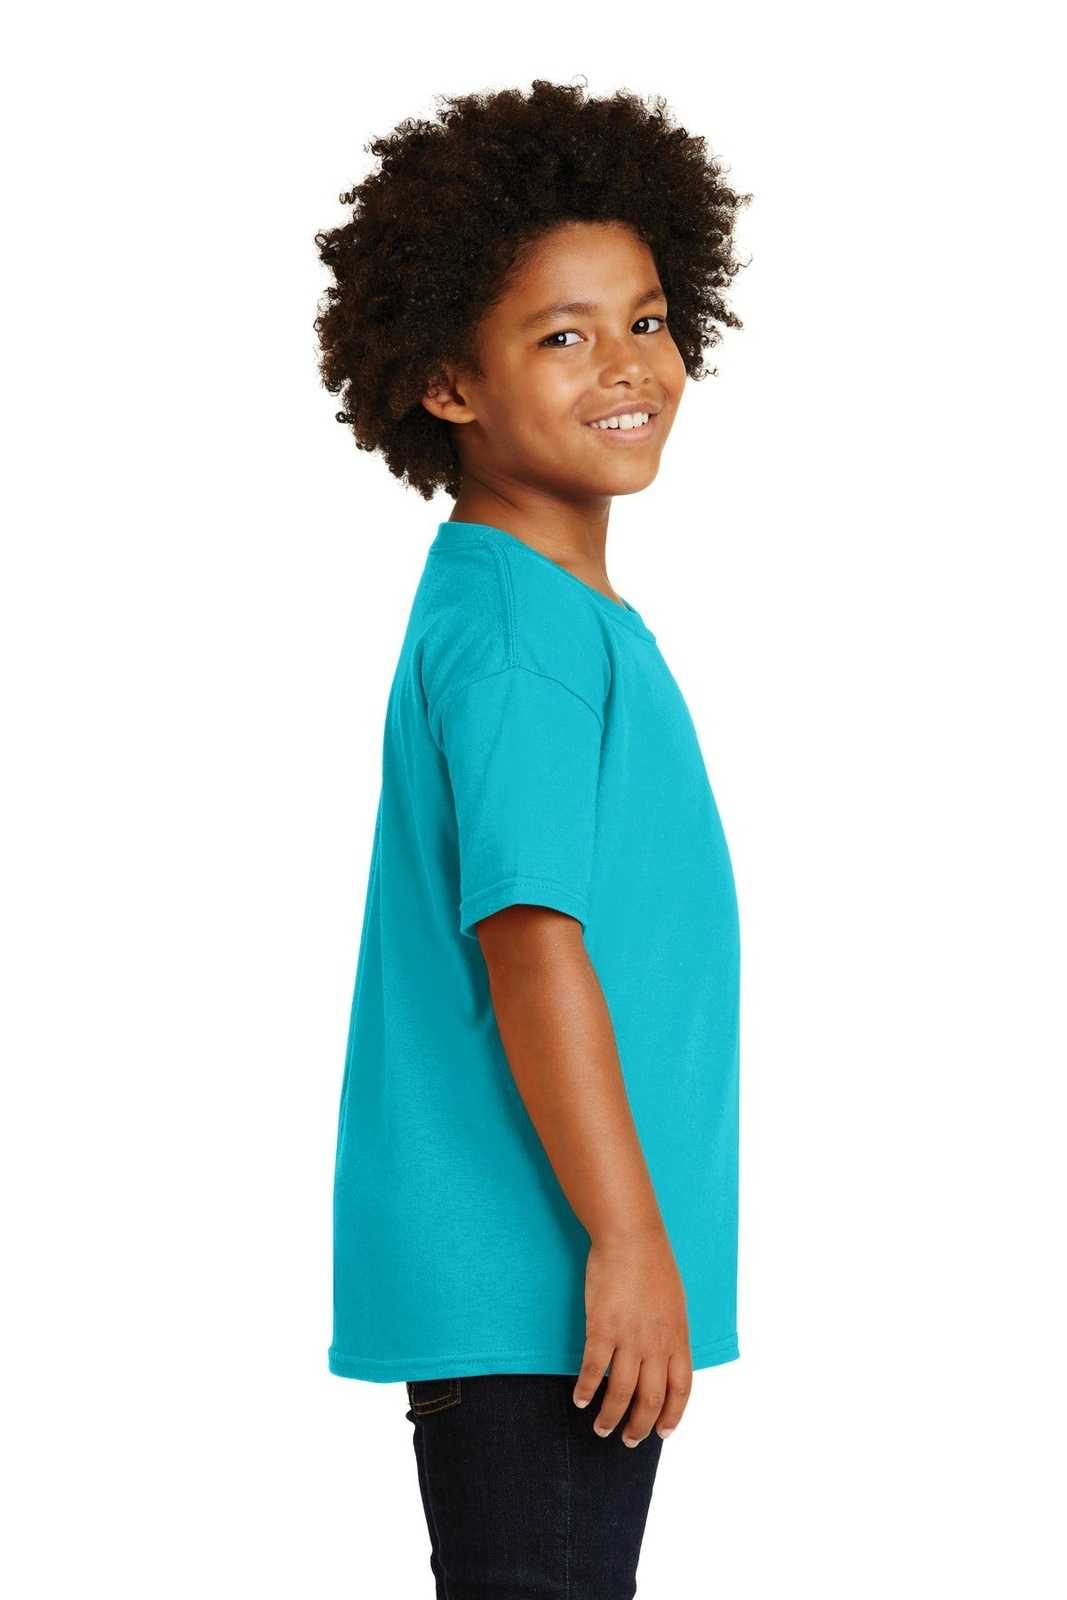 Gildan 5000B Youth Heavy Cotton 100% Cotton T-Shirt - Tropical Blue - HIT a Double